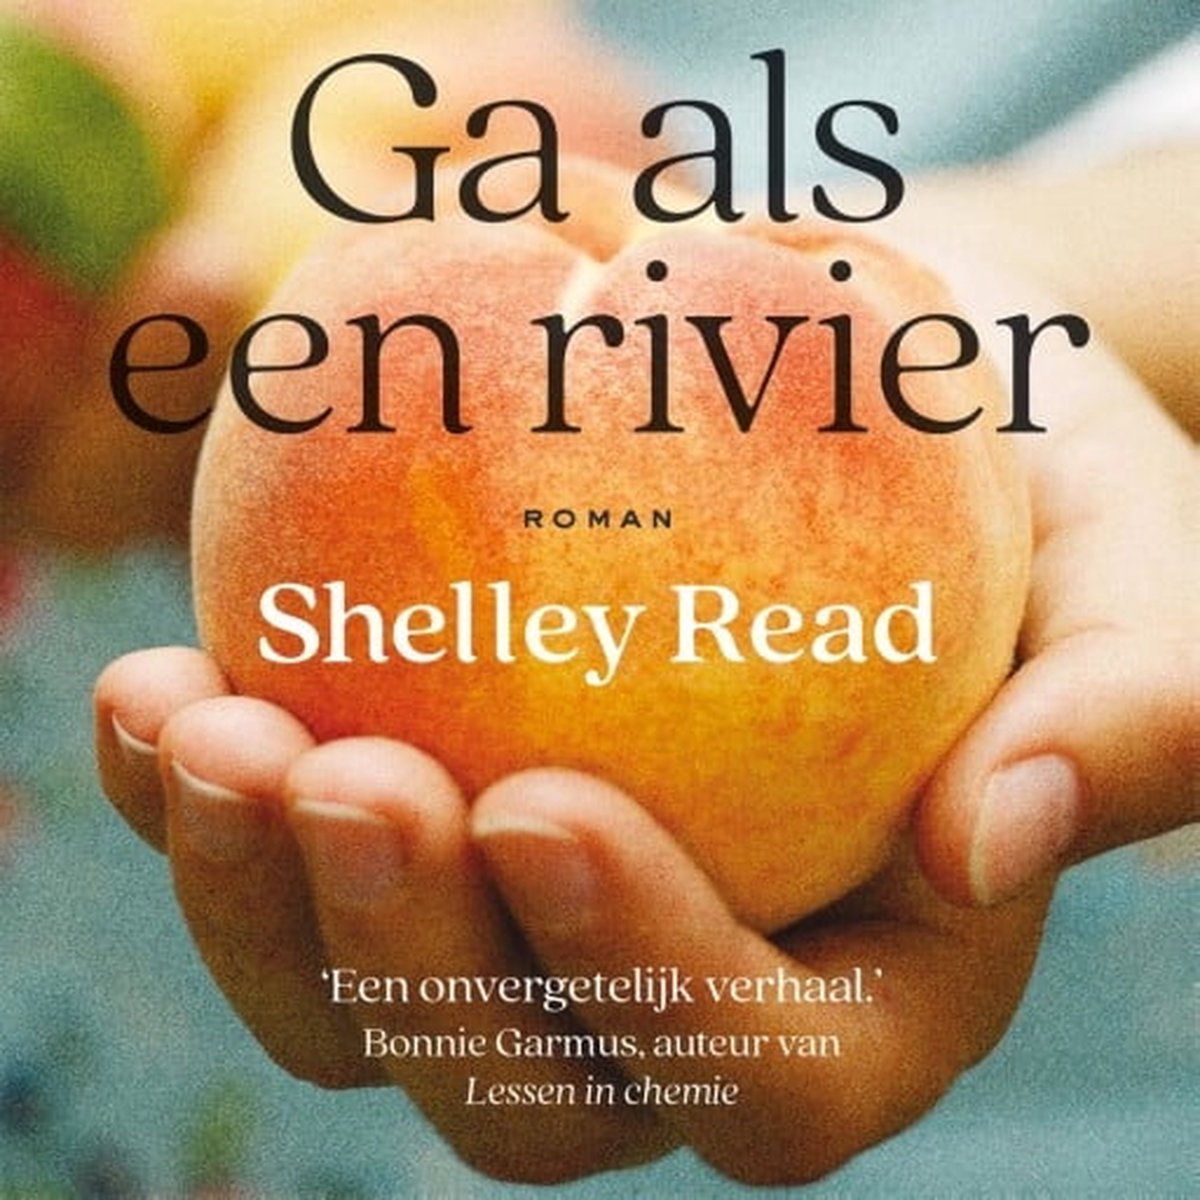 Read, Shelley - Ga als een rivier